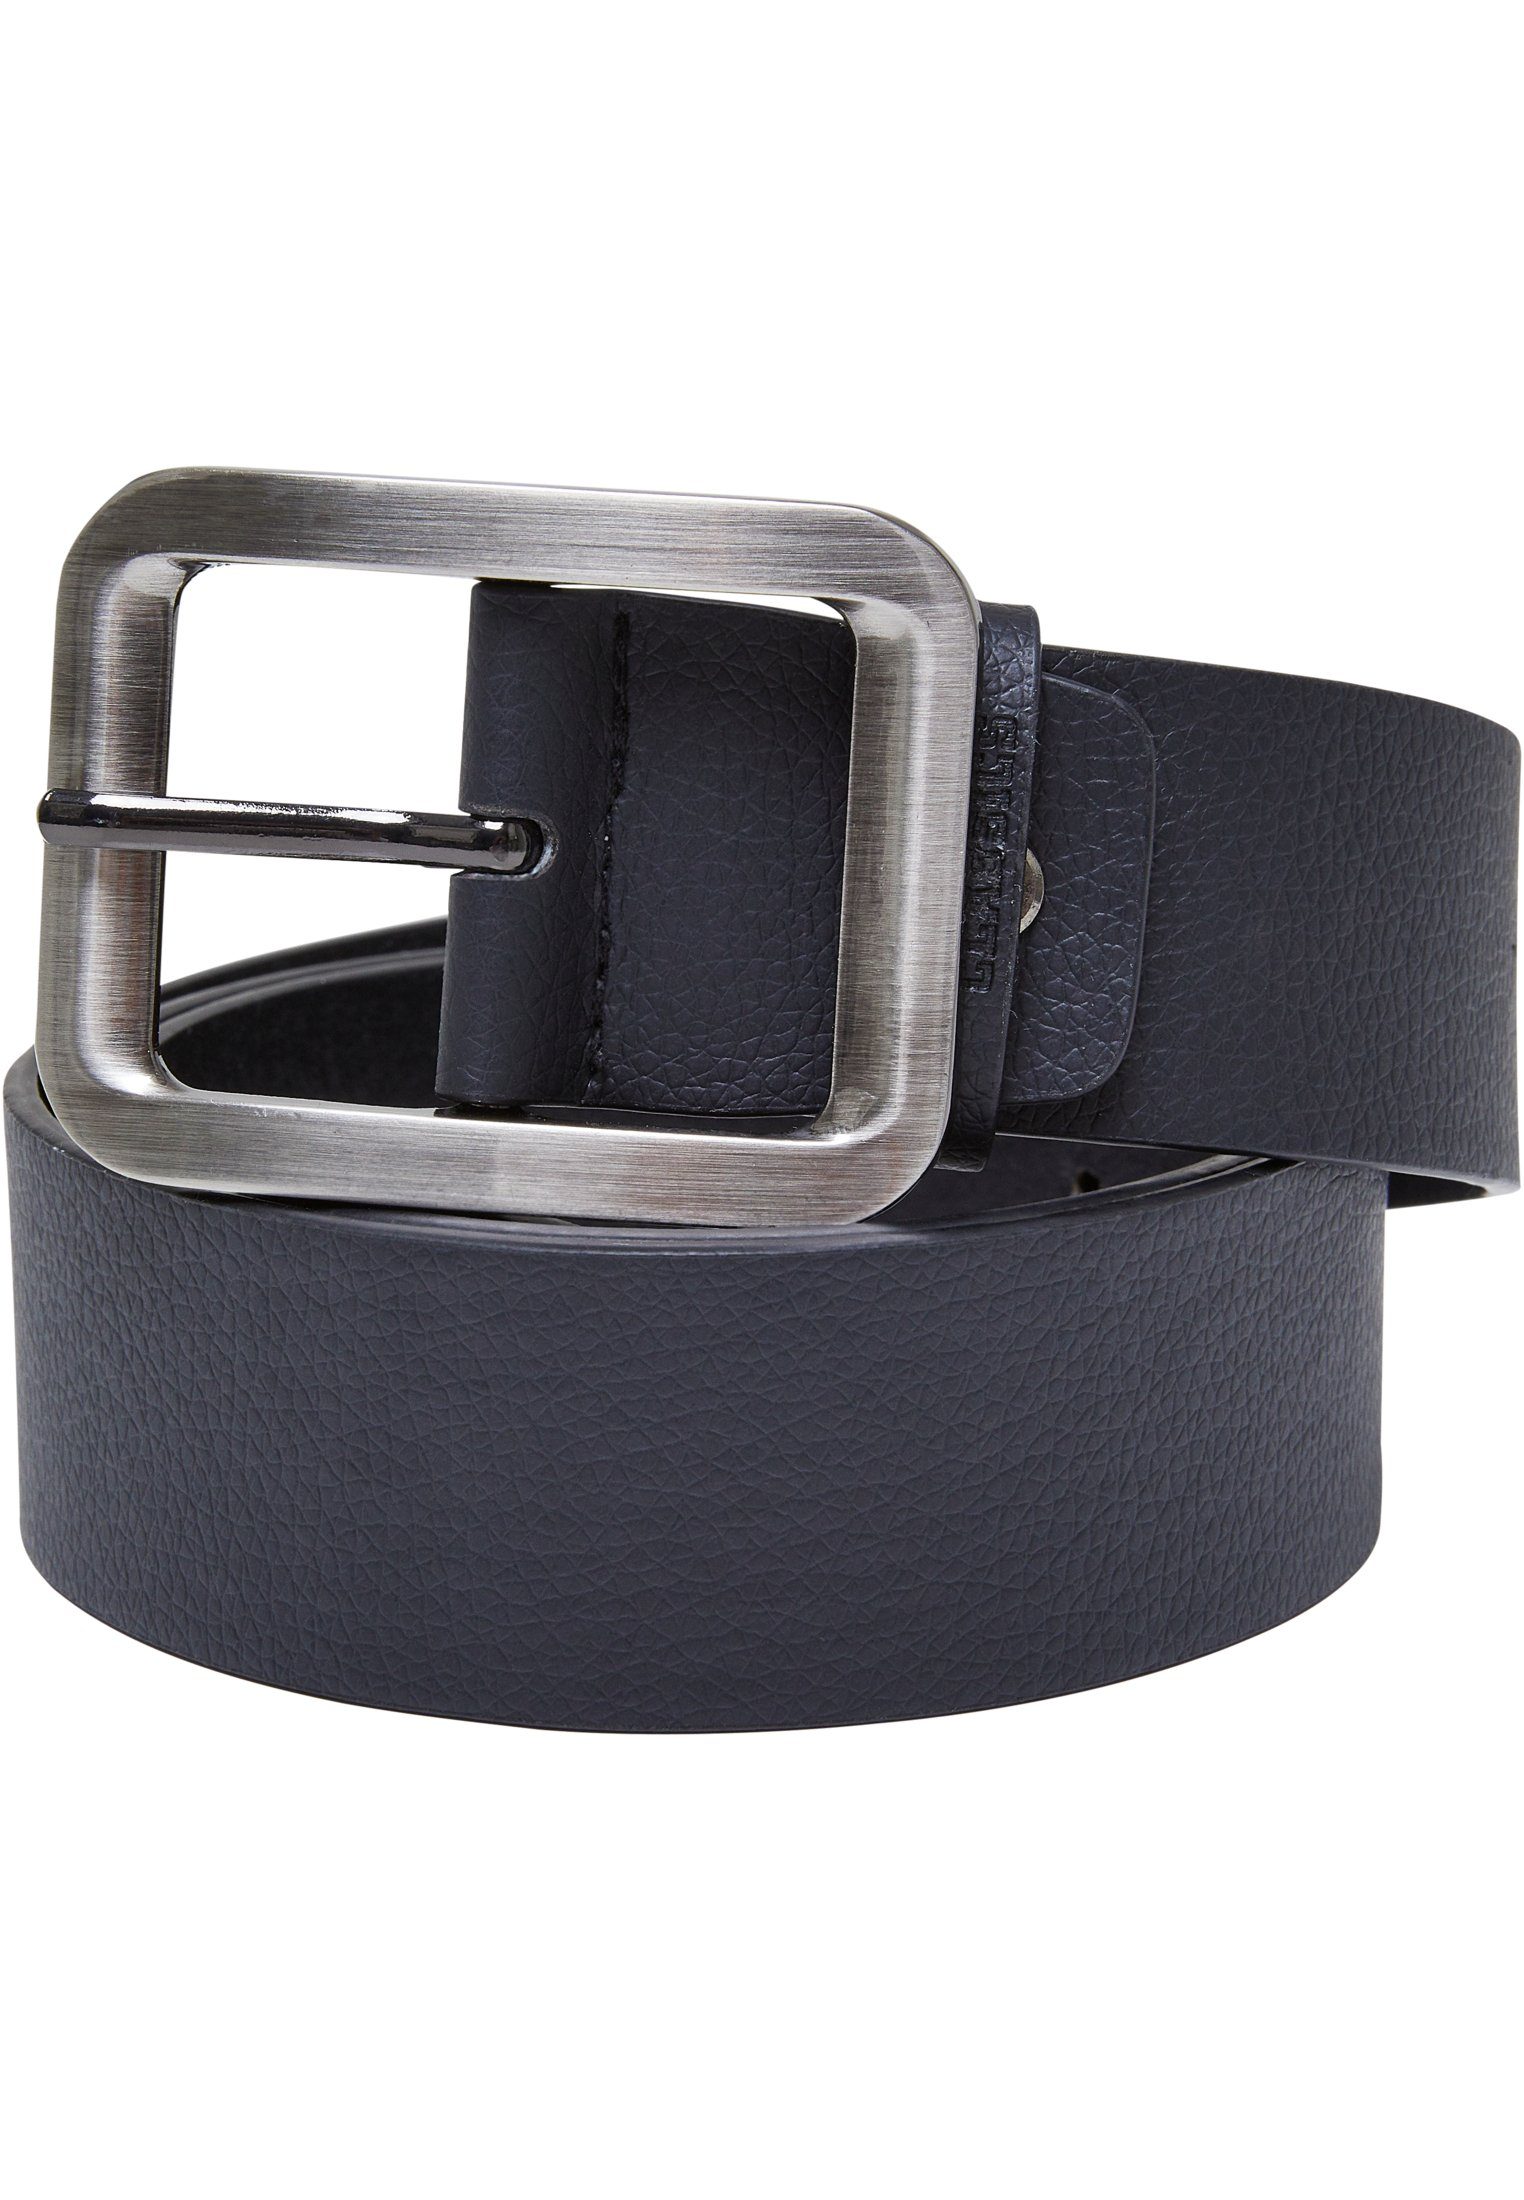 Hüftgürtel Leather Accessoires CLASSICS Basic Belt Thorn URBAN Buckle Synthetic